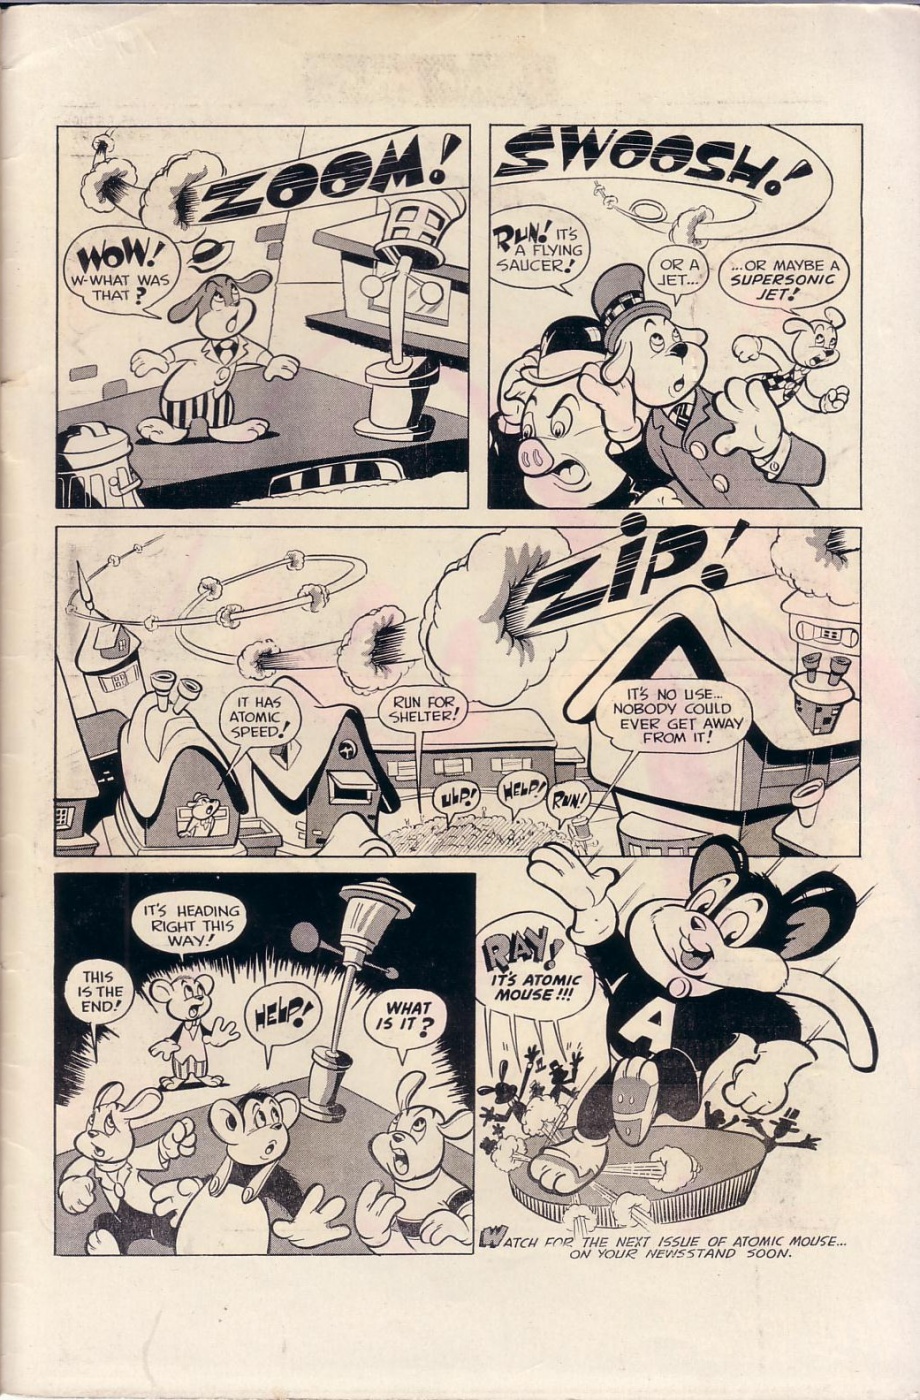 Atomic Mouse Comics - Funny Comics (35)